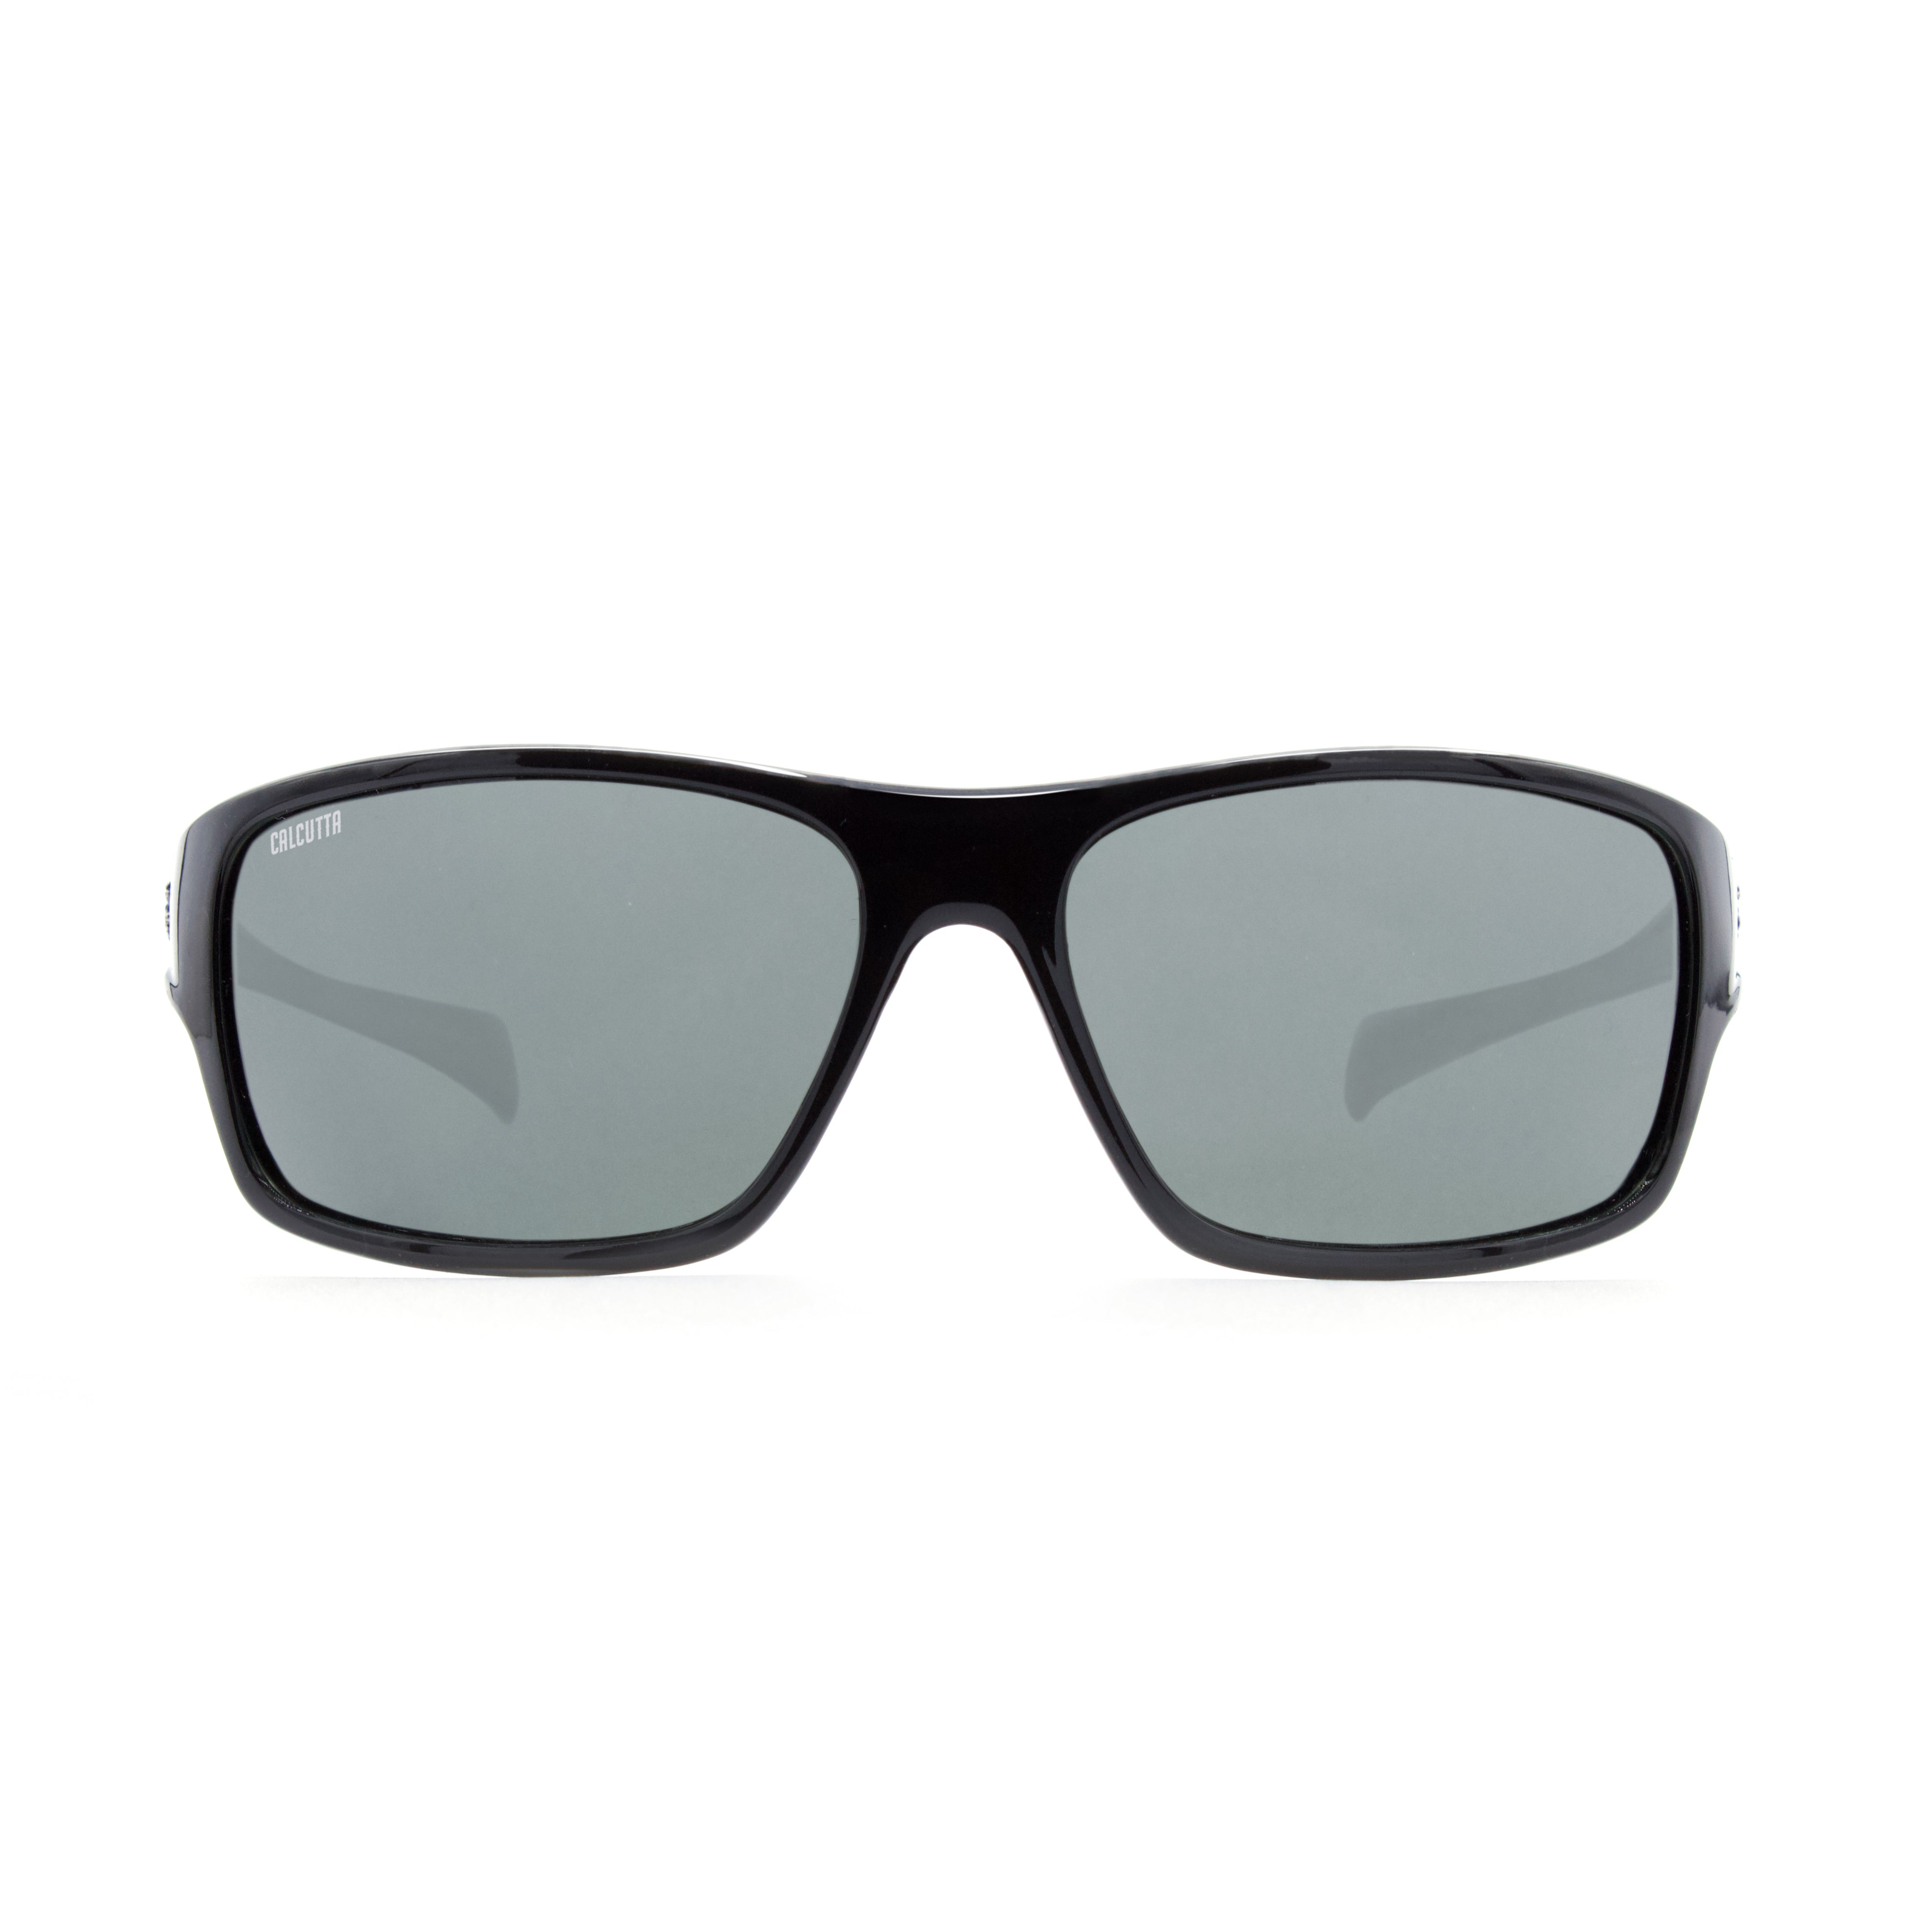 Calcutta Chesapeake sunglasses gray lens front